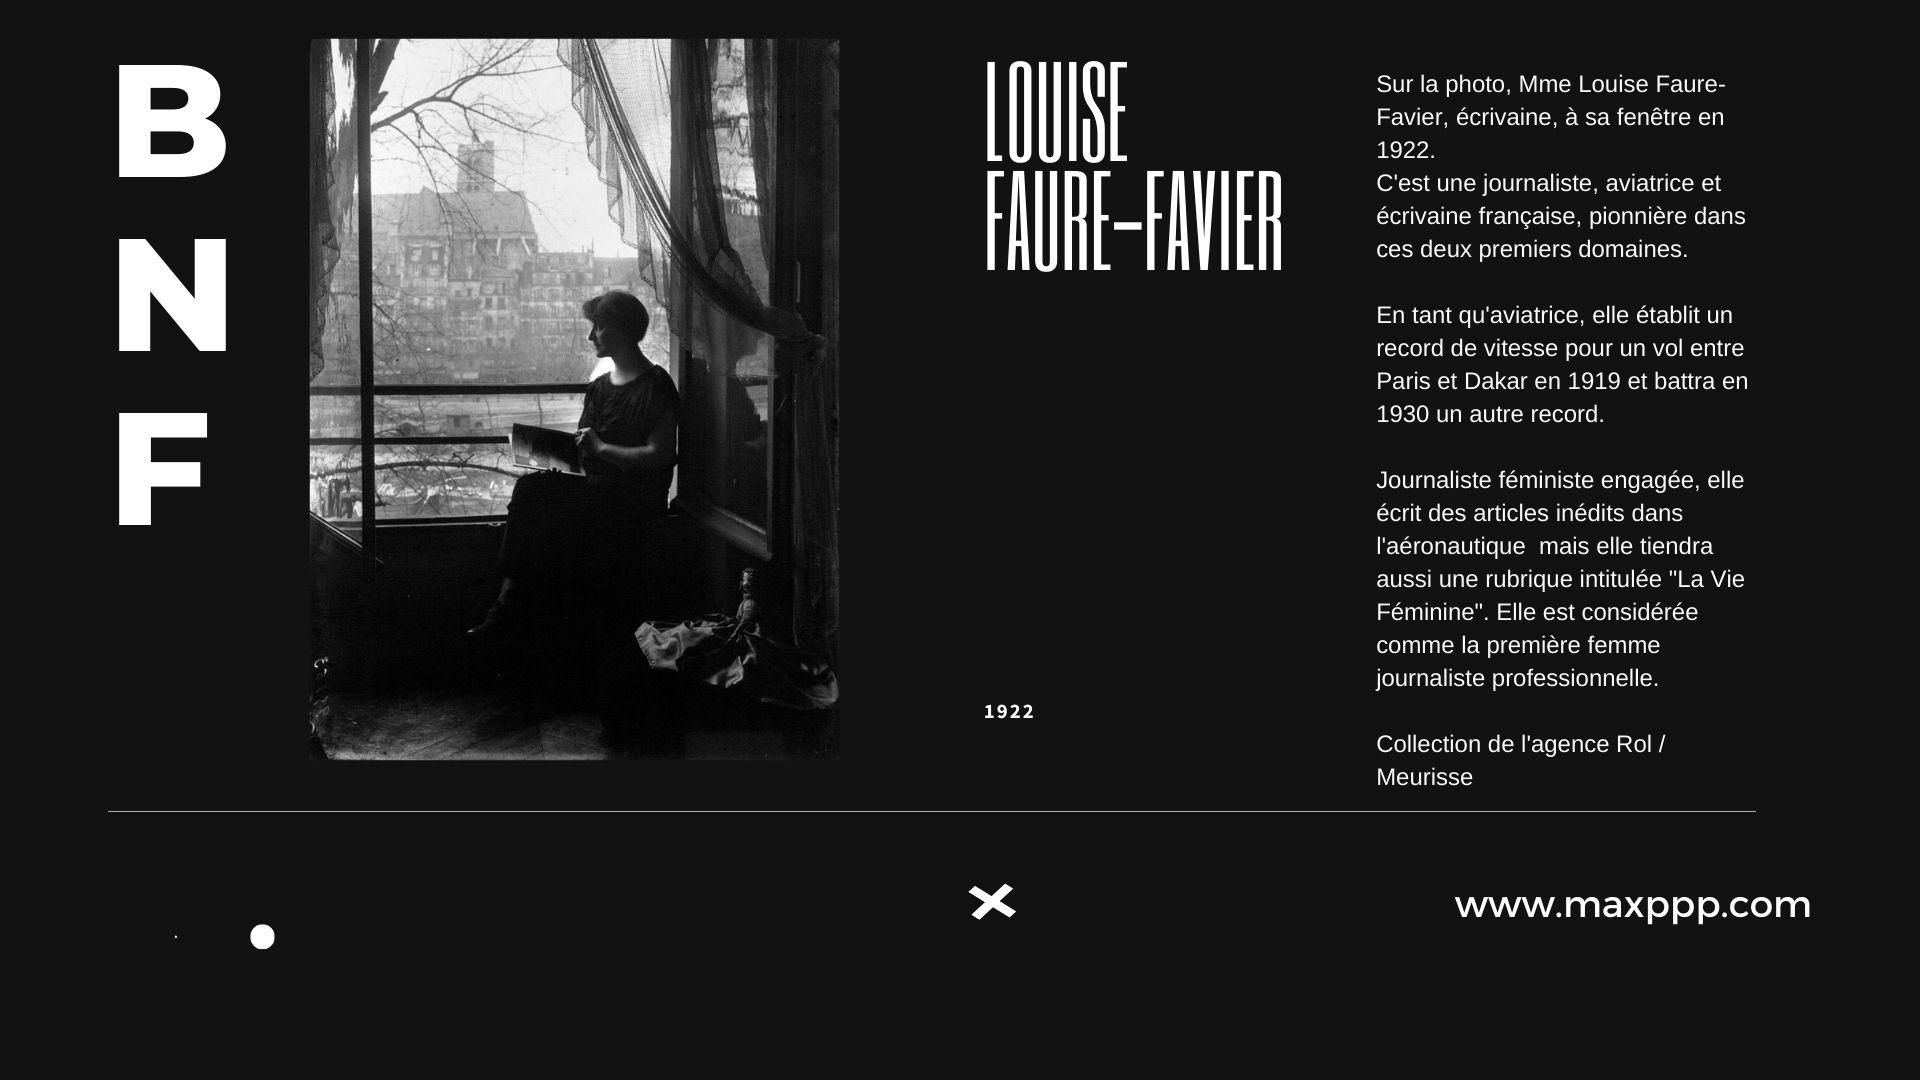 Louise Faure-Favier